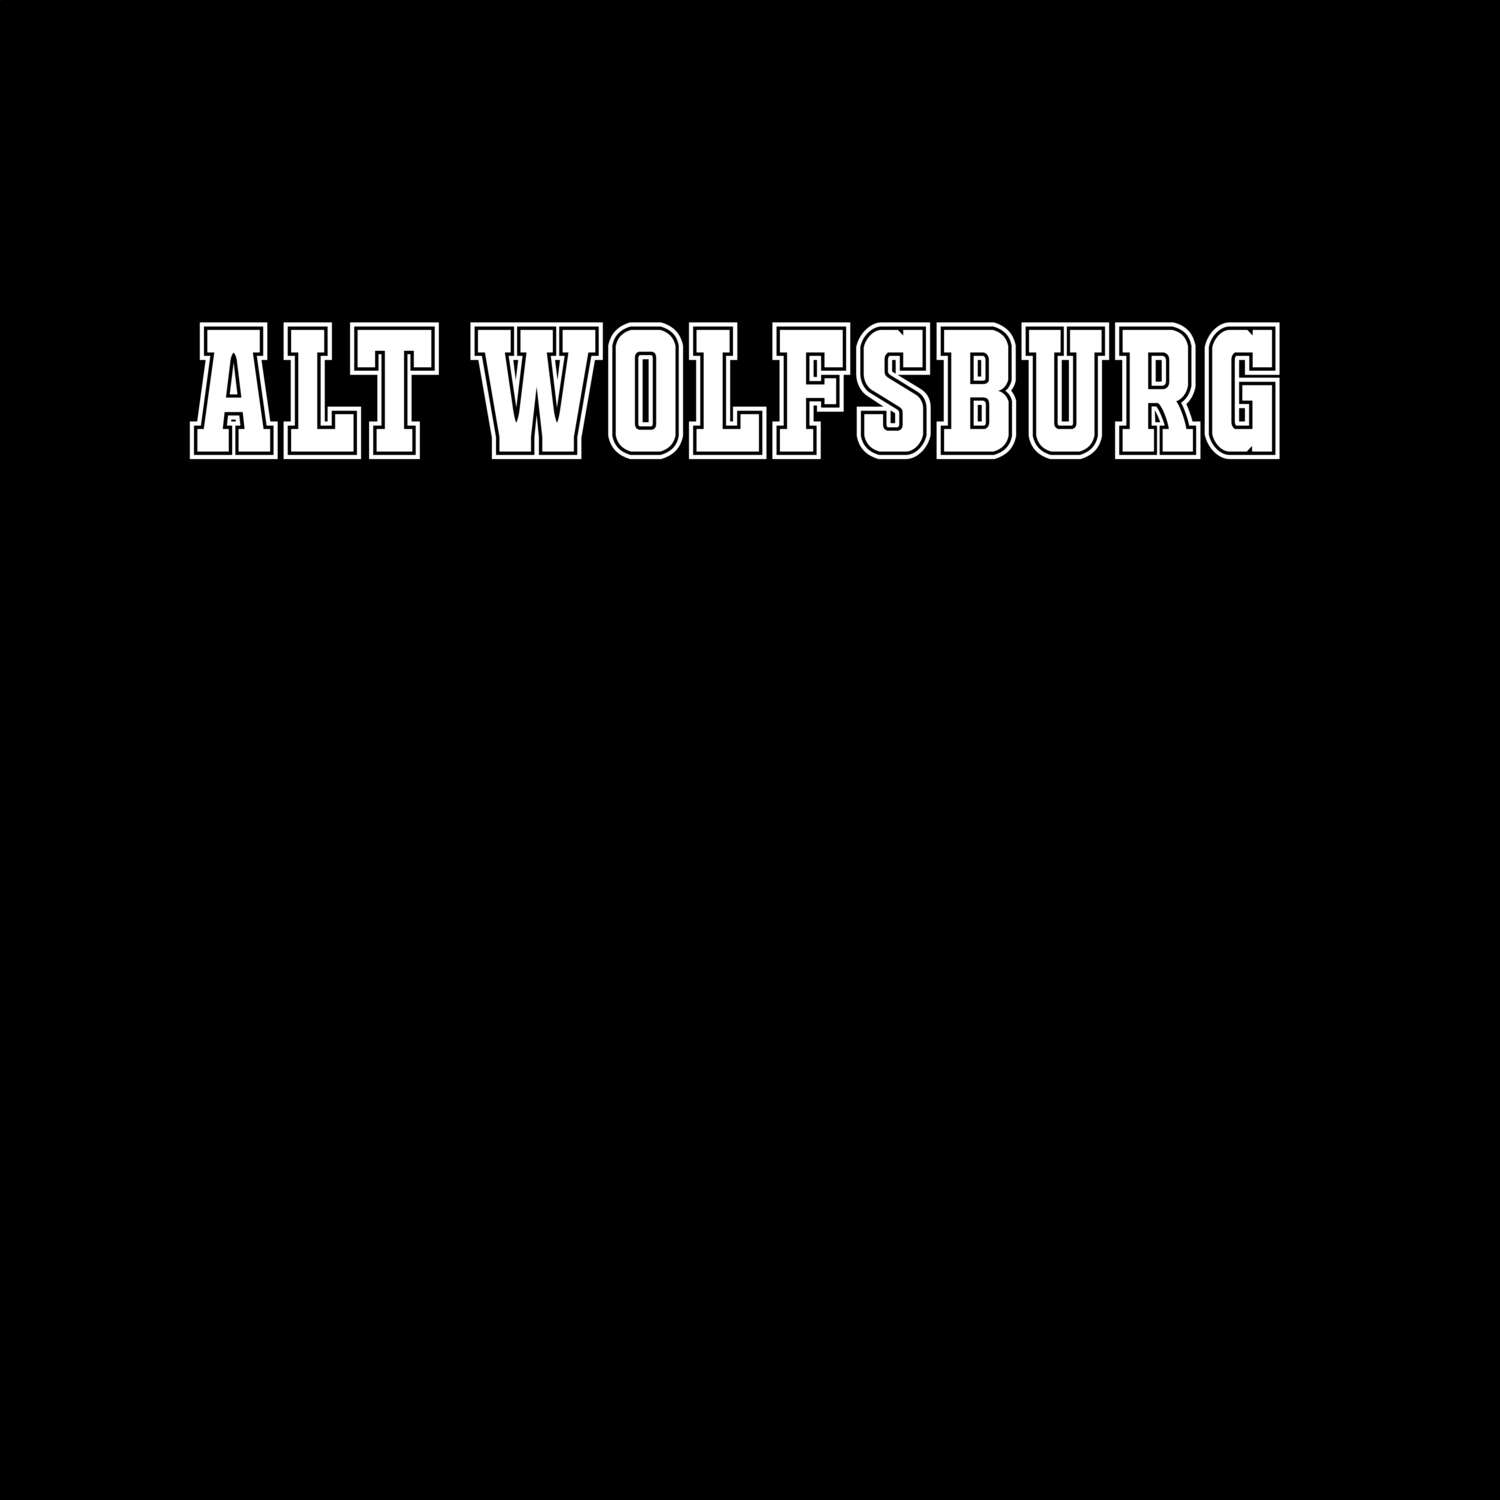 Alt Wolfsburg T-Shirt »Classic«